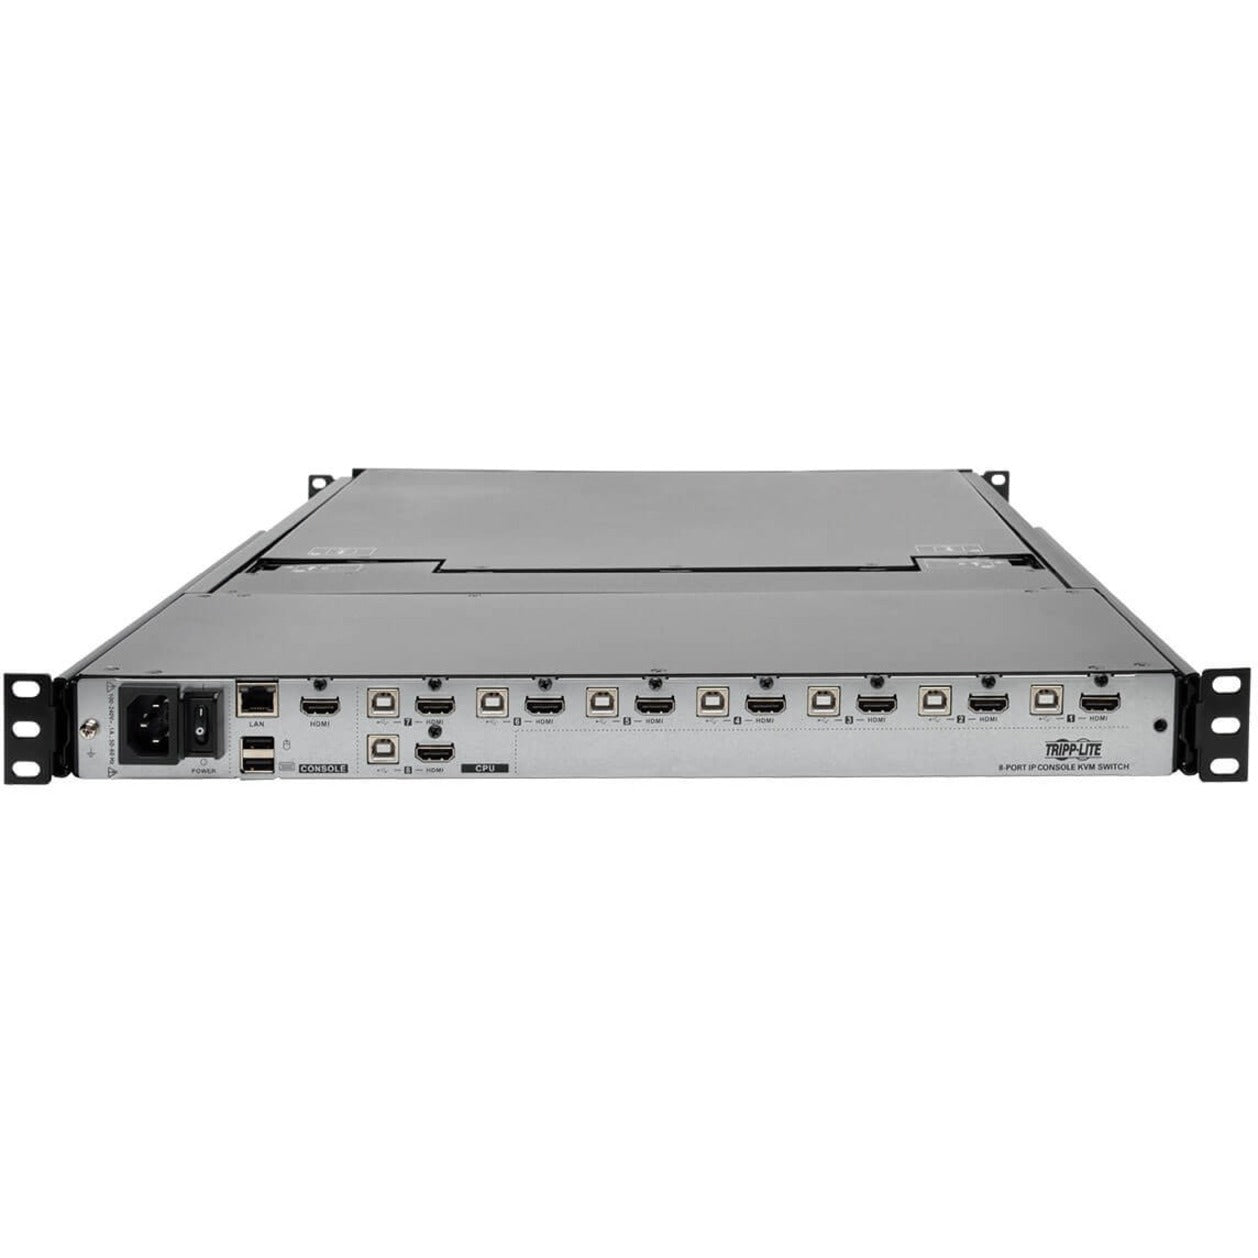 Tripp Lite - 特力普莱  B030-008-17-IP - B030-008-17-IP  NetDirector - 网络导演  8-Port - 8个端口  1U Rack-Mount Console - 1U机架式控制台  HDMI - HDMI  KVM Switch - KVM开关  17 in. LCD - 17英寸液晶显示屏  IP - IP  Full HD - 全高清  TouchPad - 触摸板  TAA Compliant - 符合TAA要求